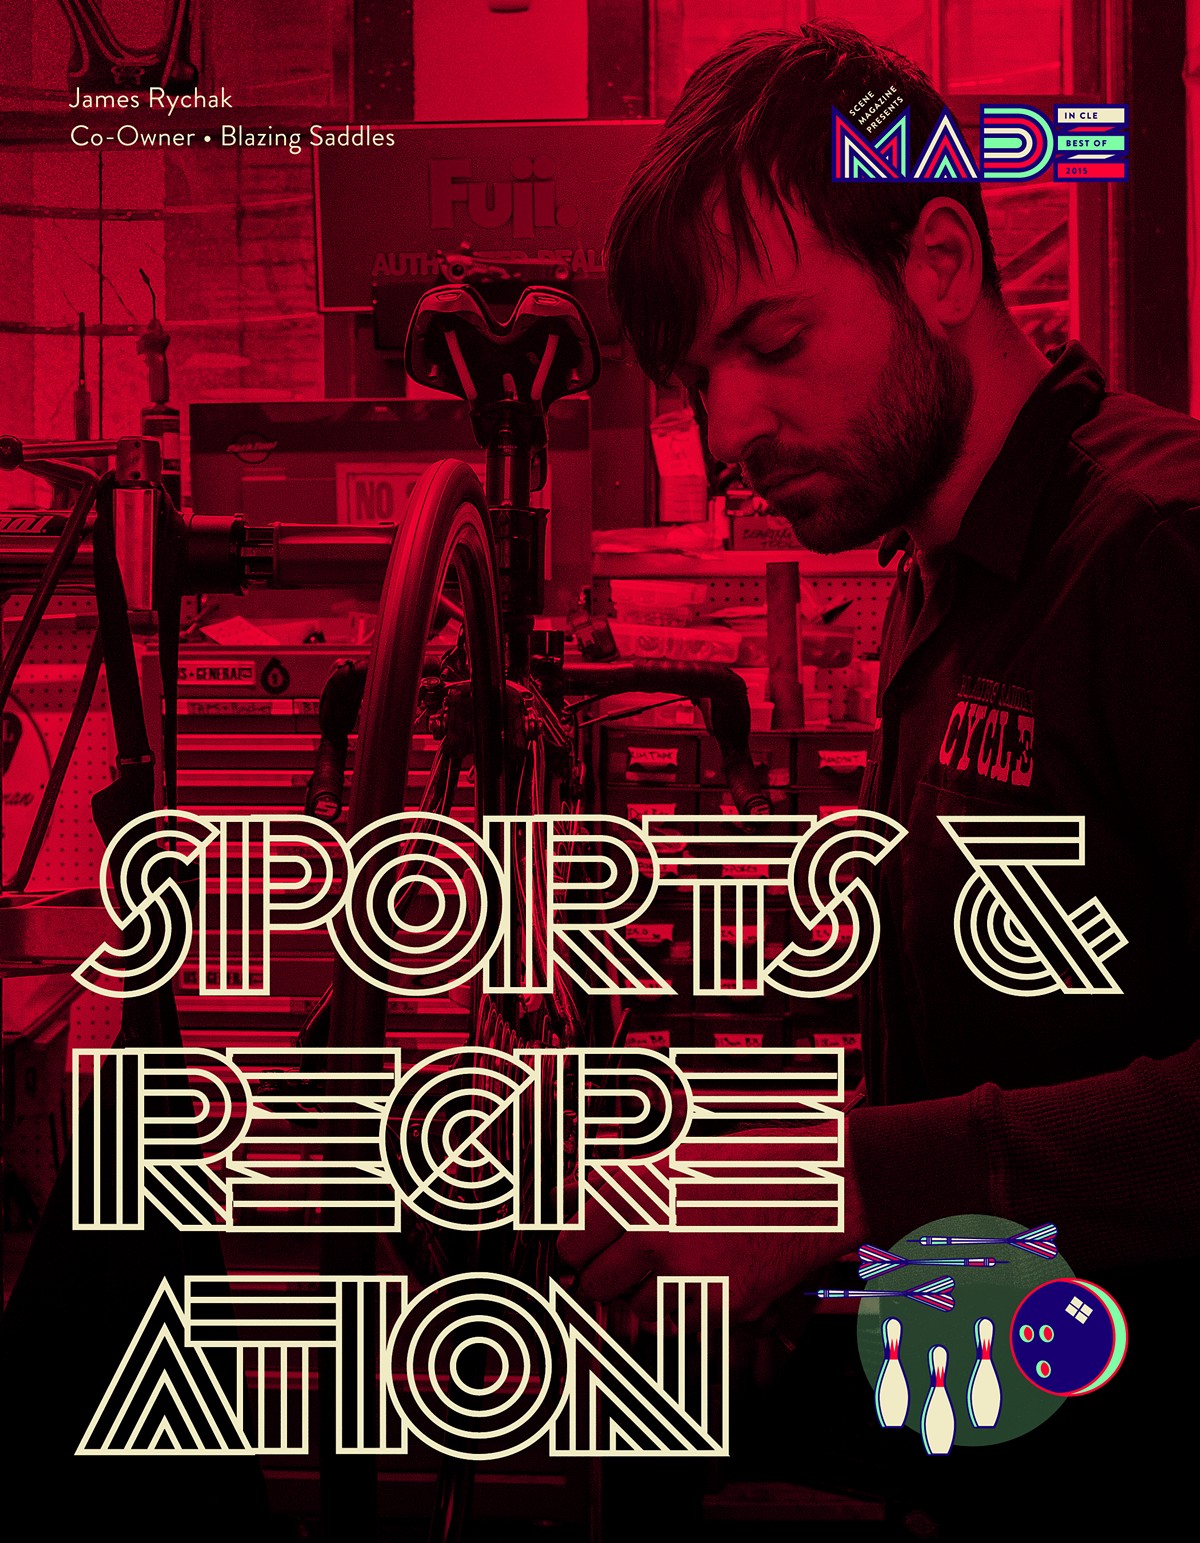 Sports & Recreation